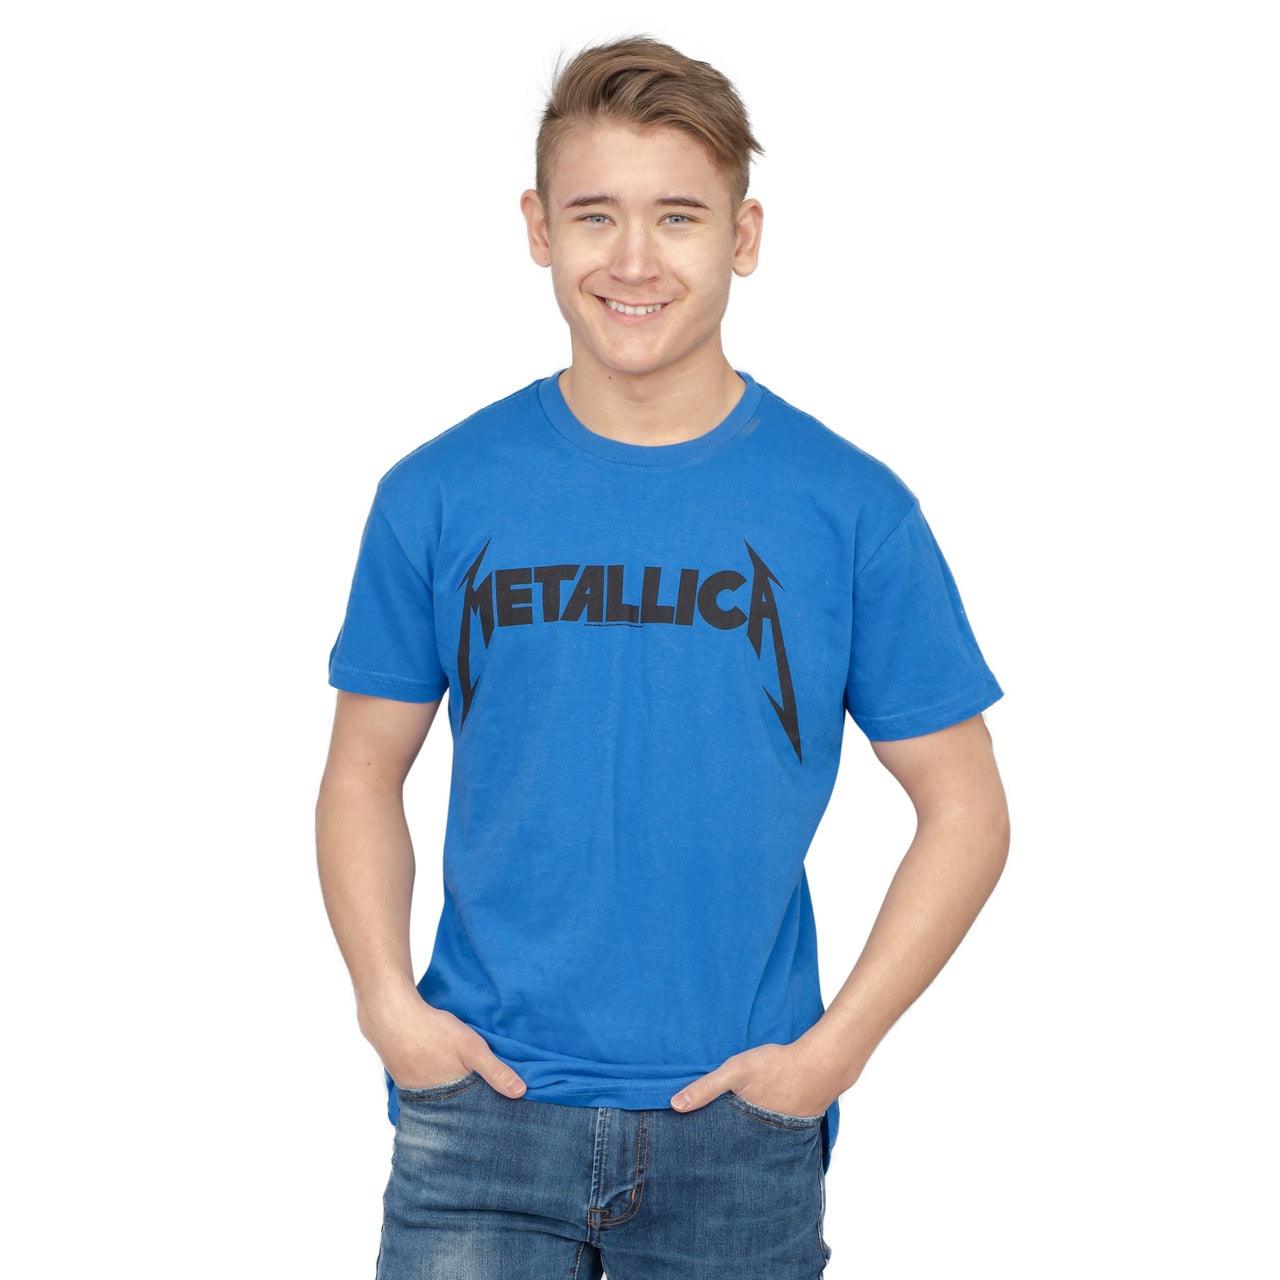 Metallica Shirts - The Classic Metallica Shirt